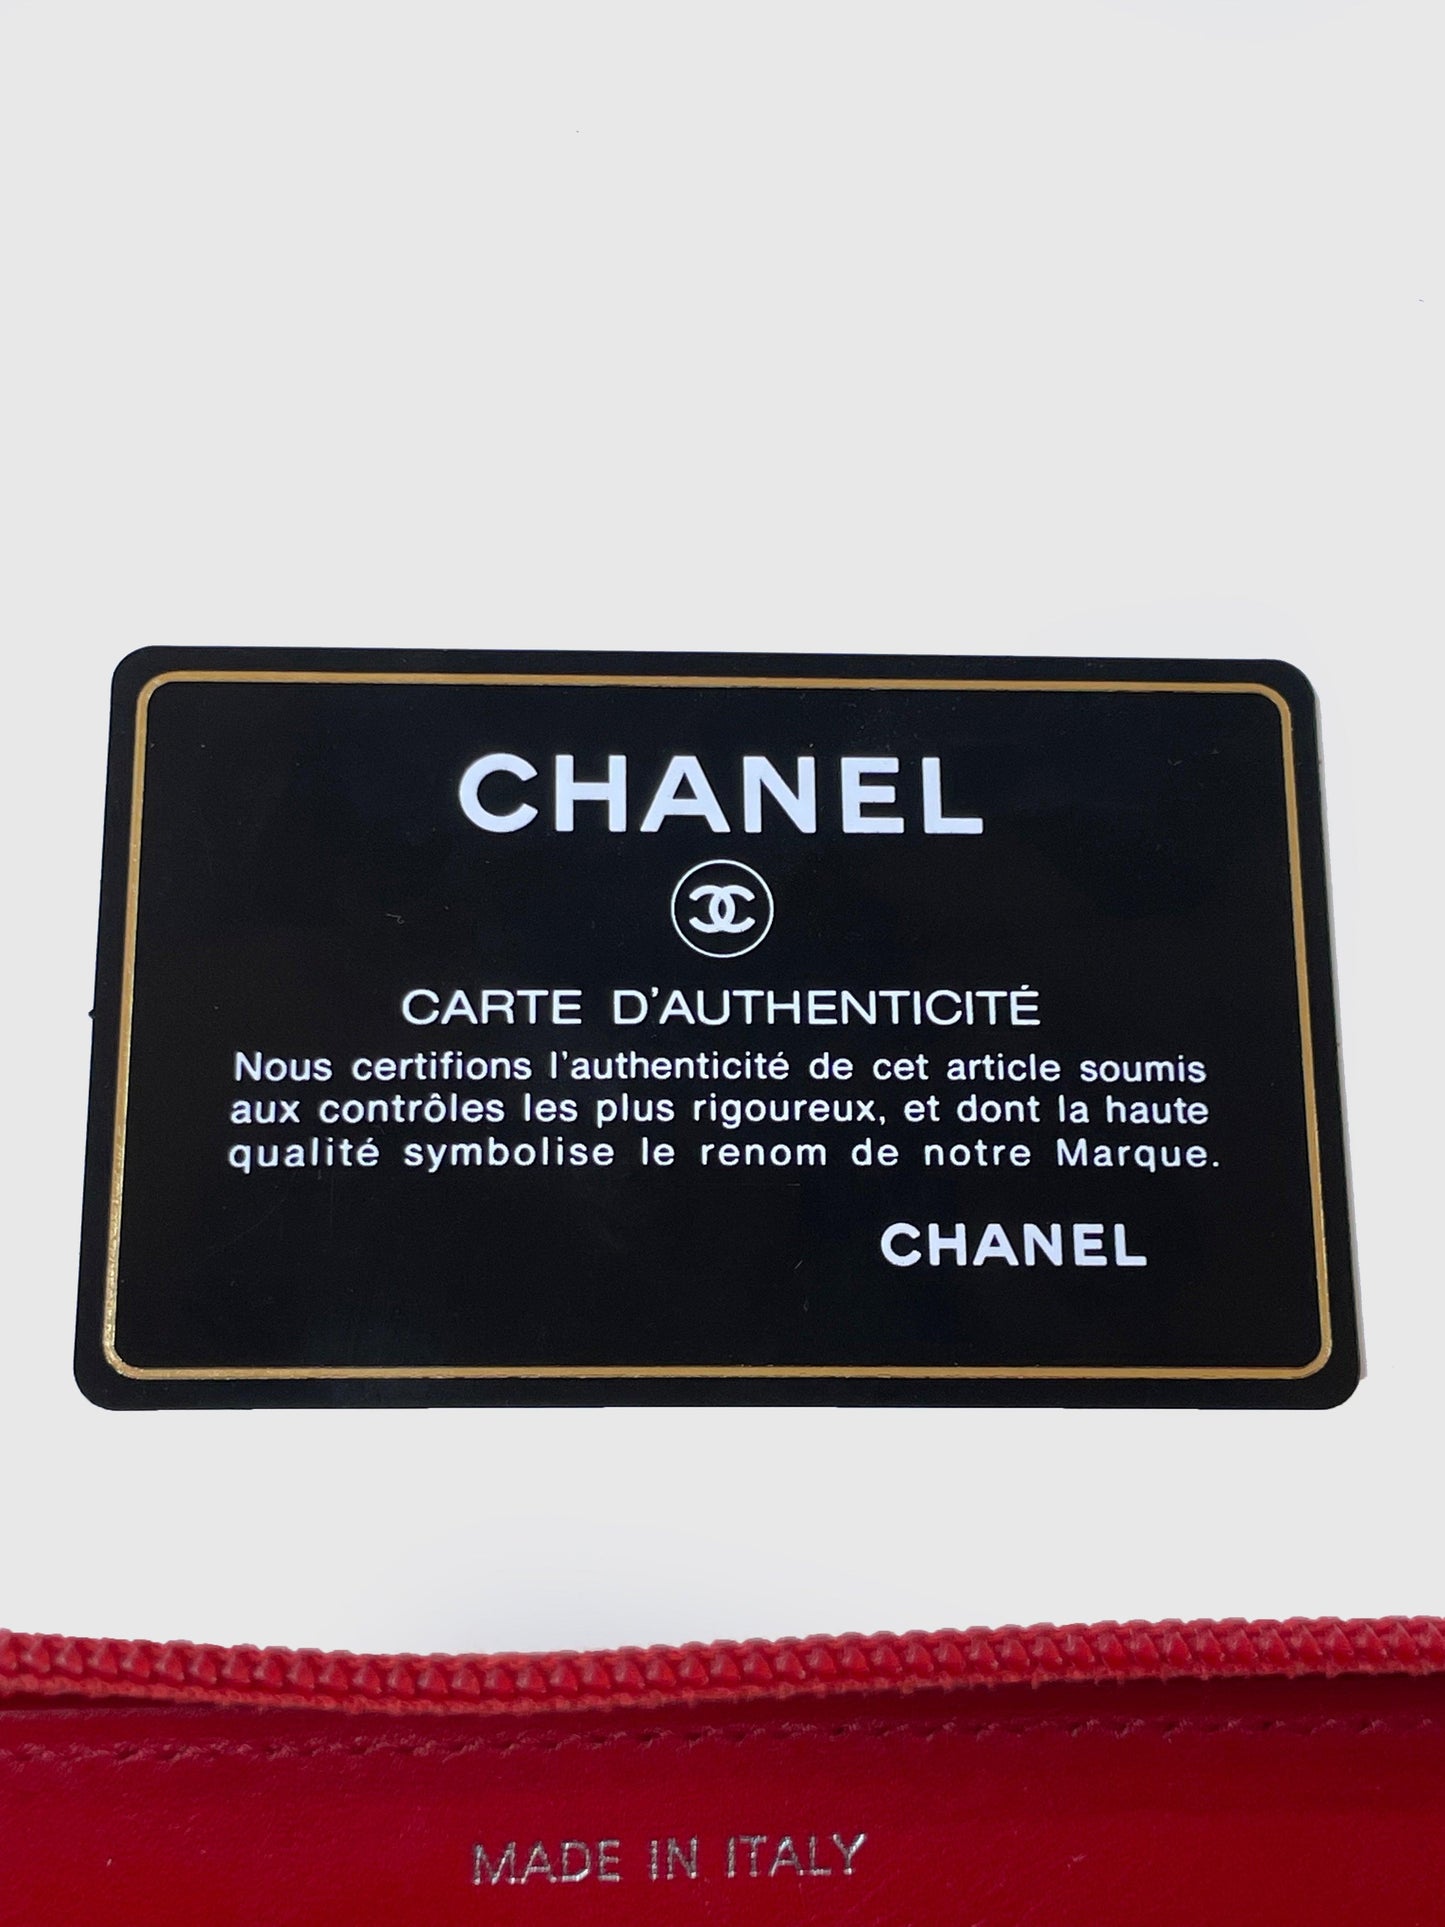 Chanel - Second Nature Boutique